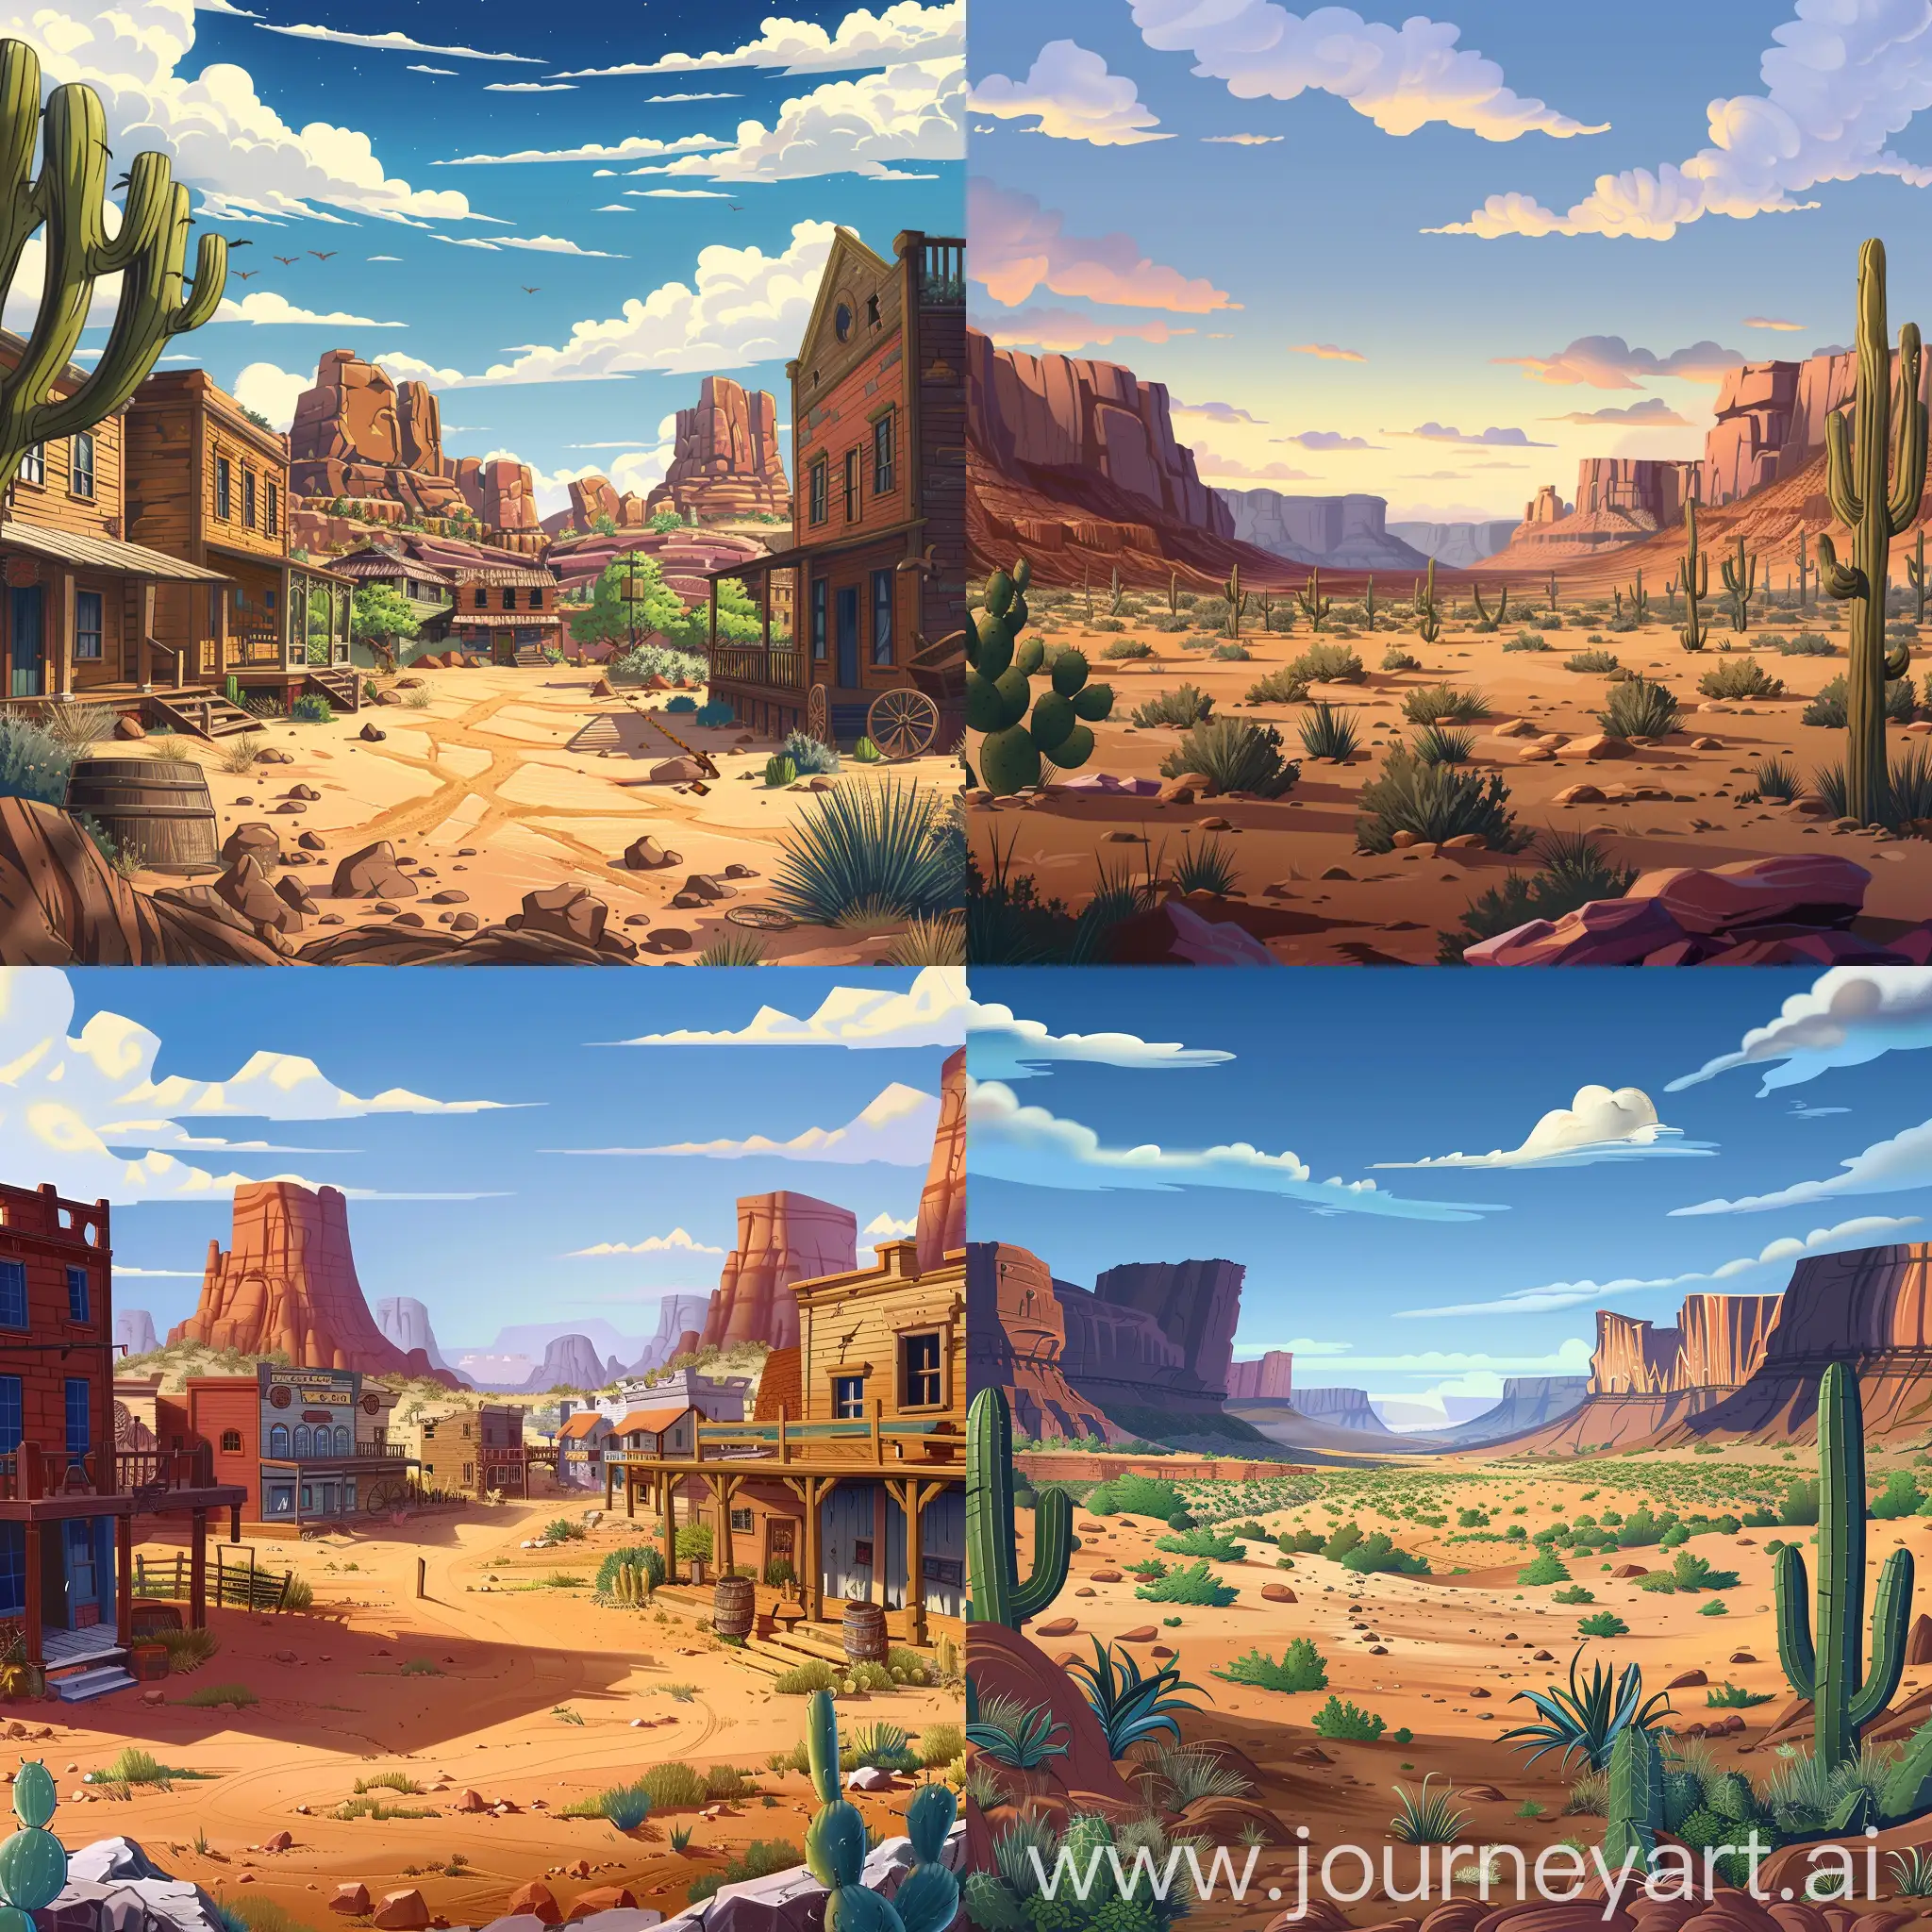 Disney-Animation-Wild-West-Scene-Illustration